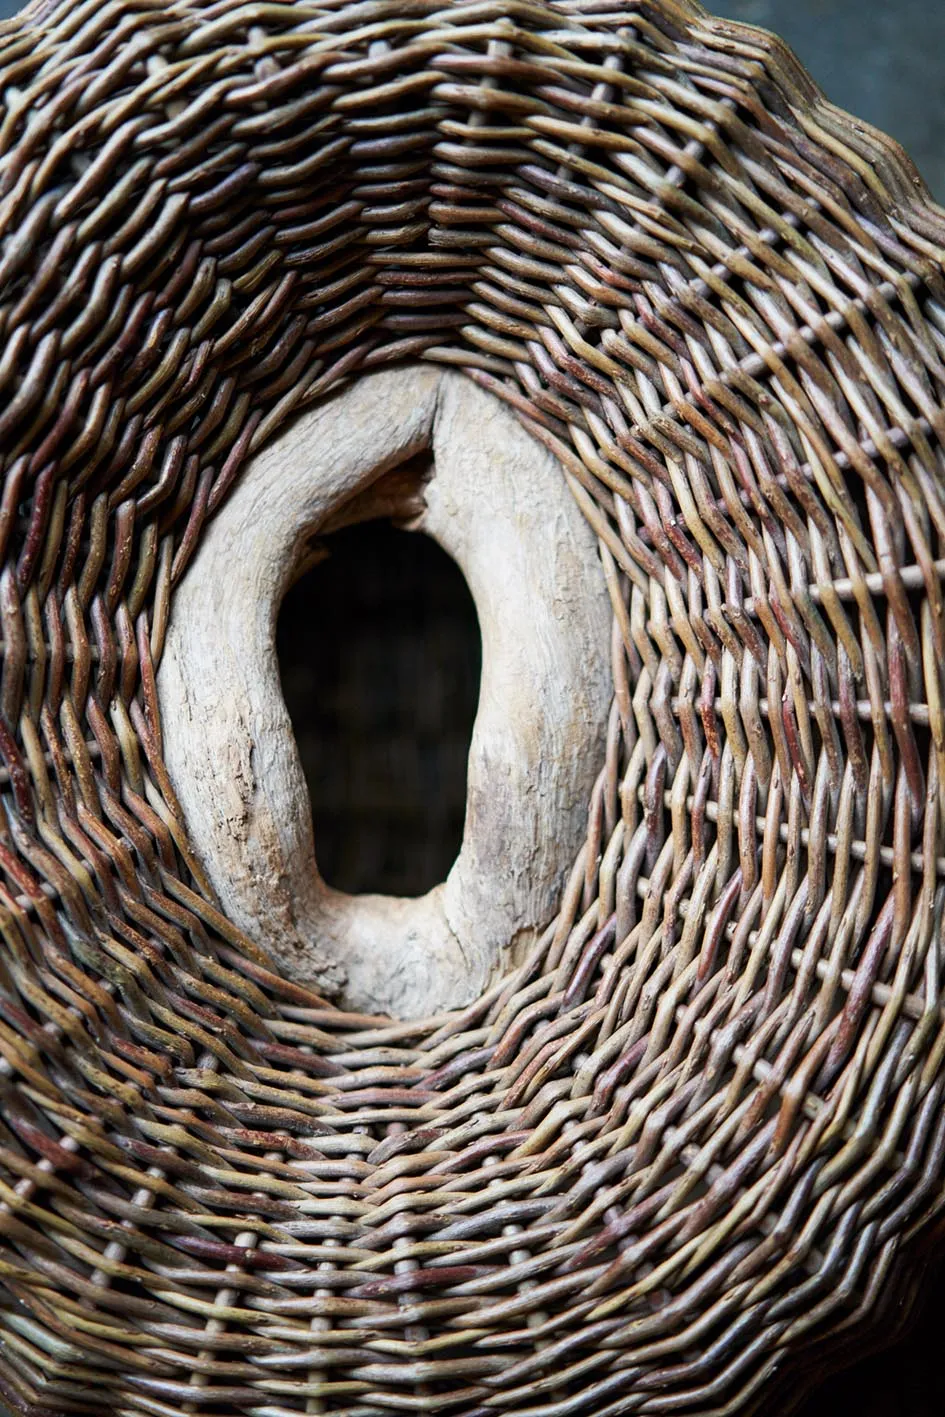 One of Joe Hogan's woven baskets